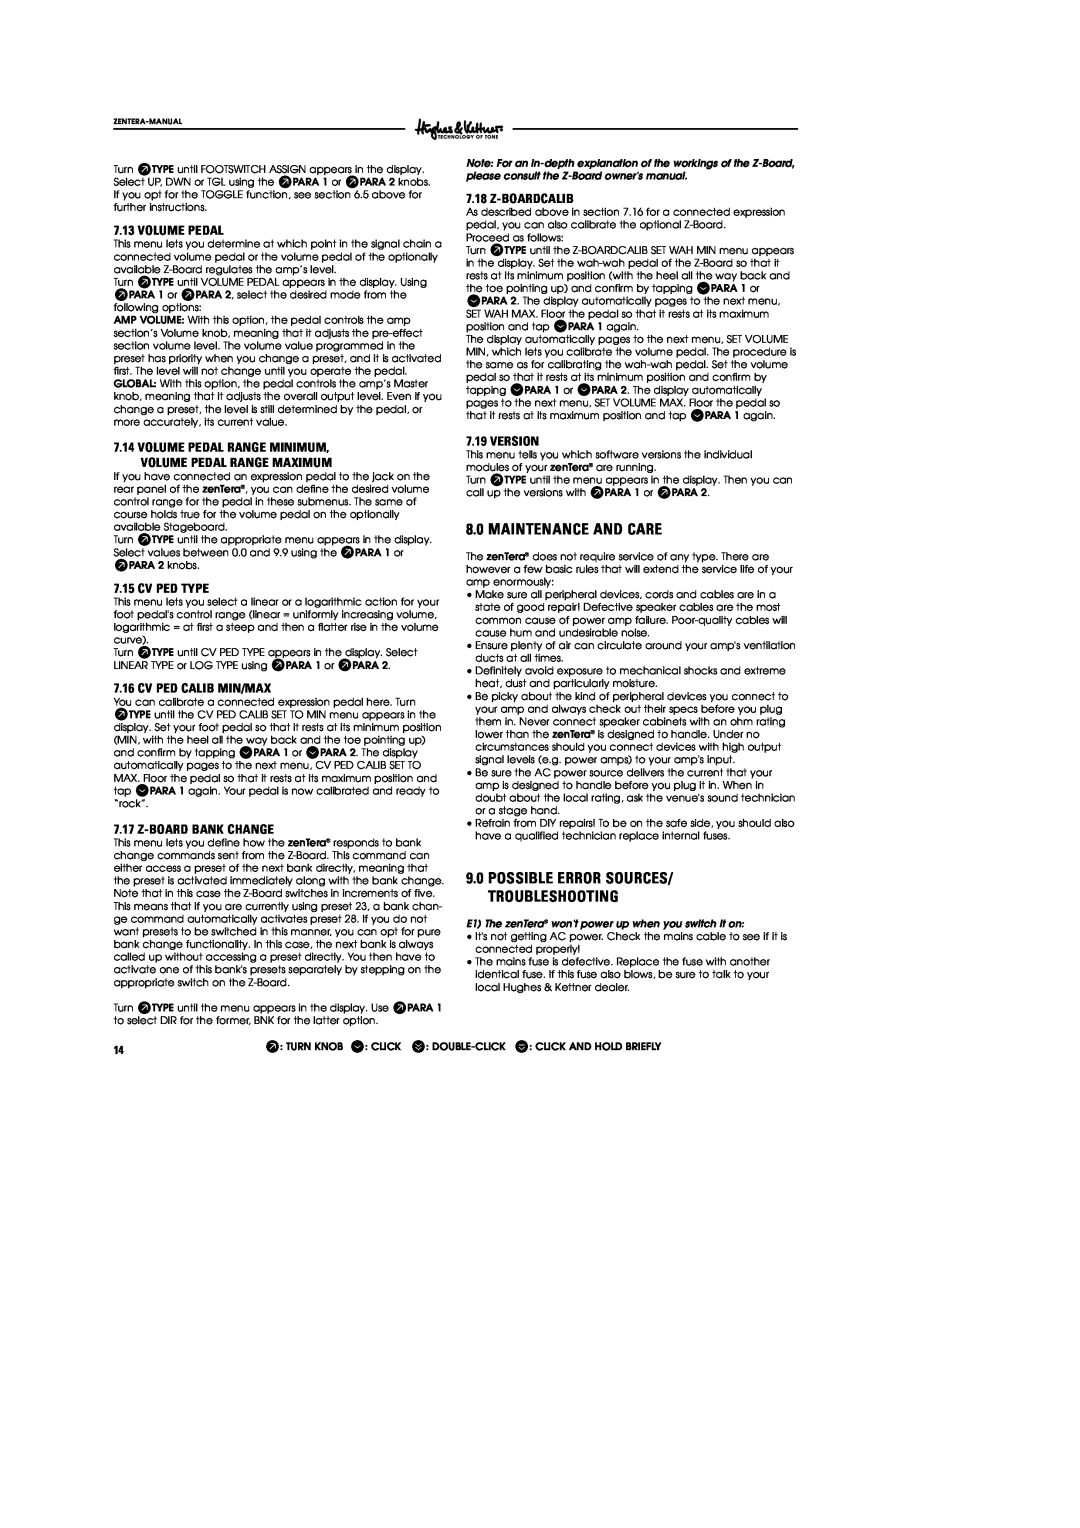 Hughes & Kettner DSM manual Maintenance And Care, Volume Pedal, Z-Boardcalib, Cv Ped Type, Cv Ped Calib Min/Max, Version 